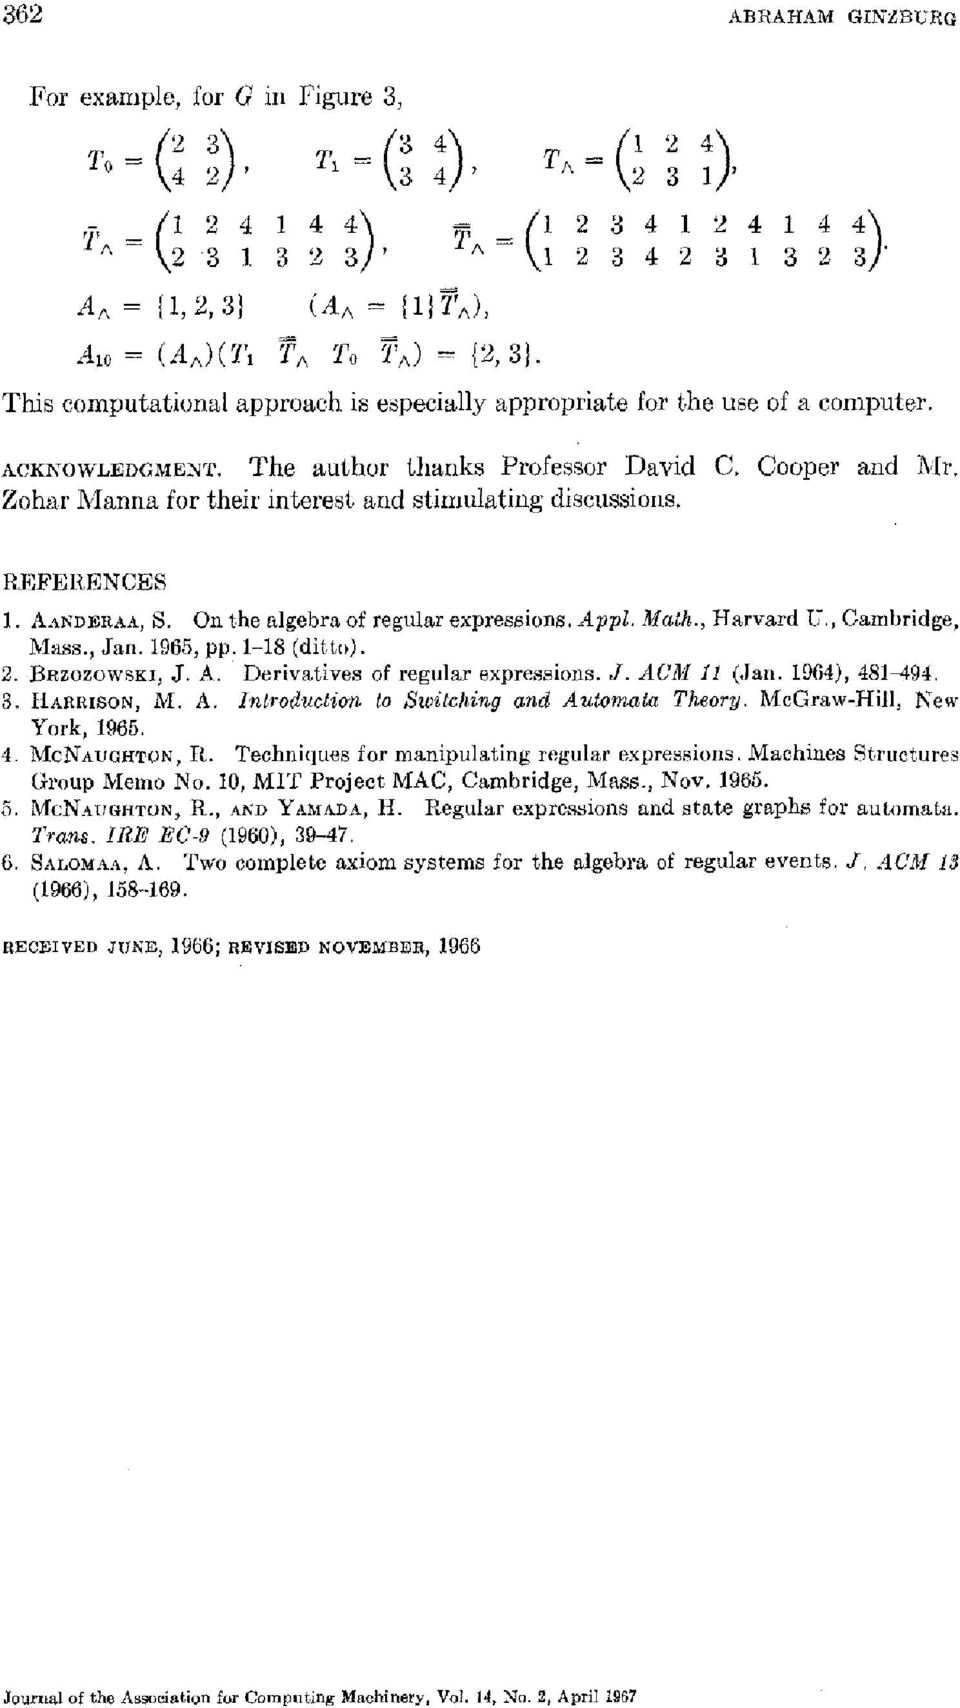 , Cambridge, Mass., Jan. 965, pp: -8 (ditt). 2. BnzzwsKI, J.. Derivatives f regular expressins. J. CM (Jan. 964), 48-494. 3. HRRISON, M.. Intrductin t Switching and utmata Thery.